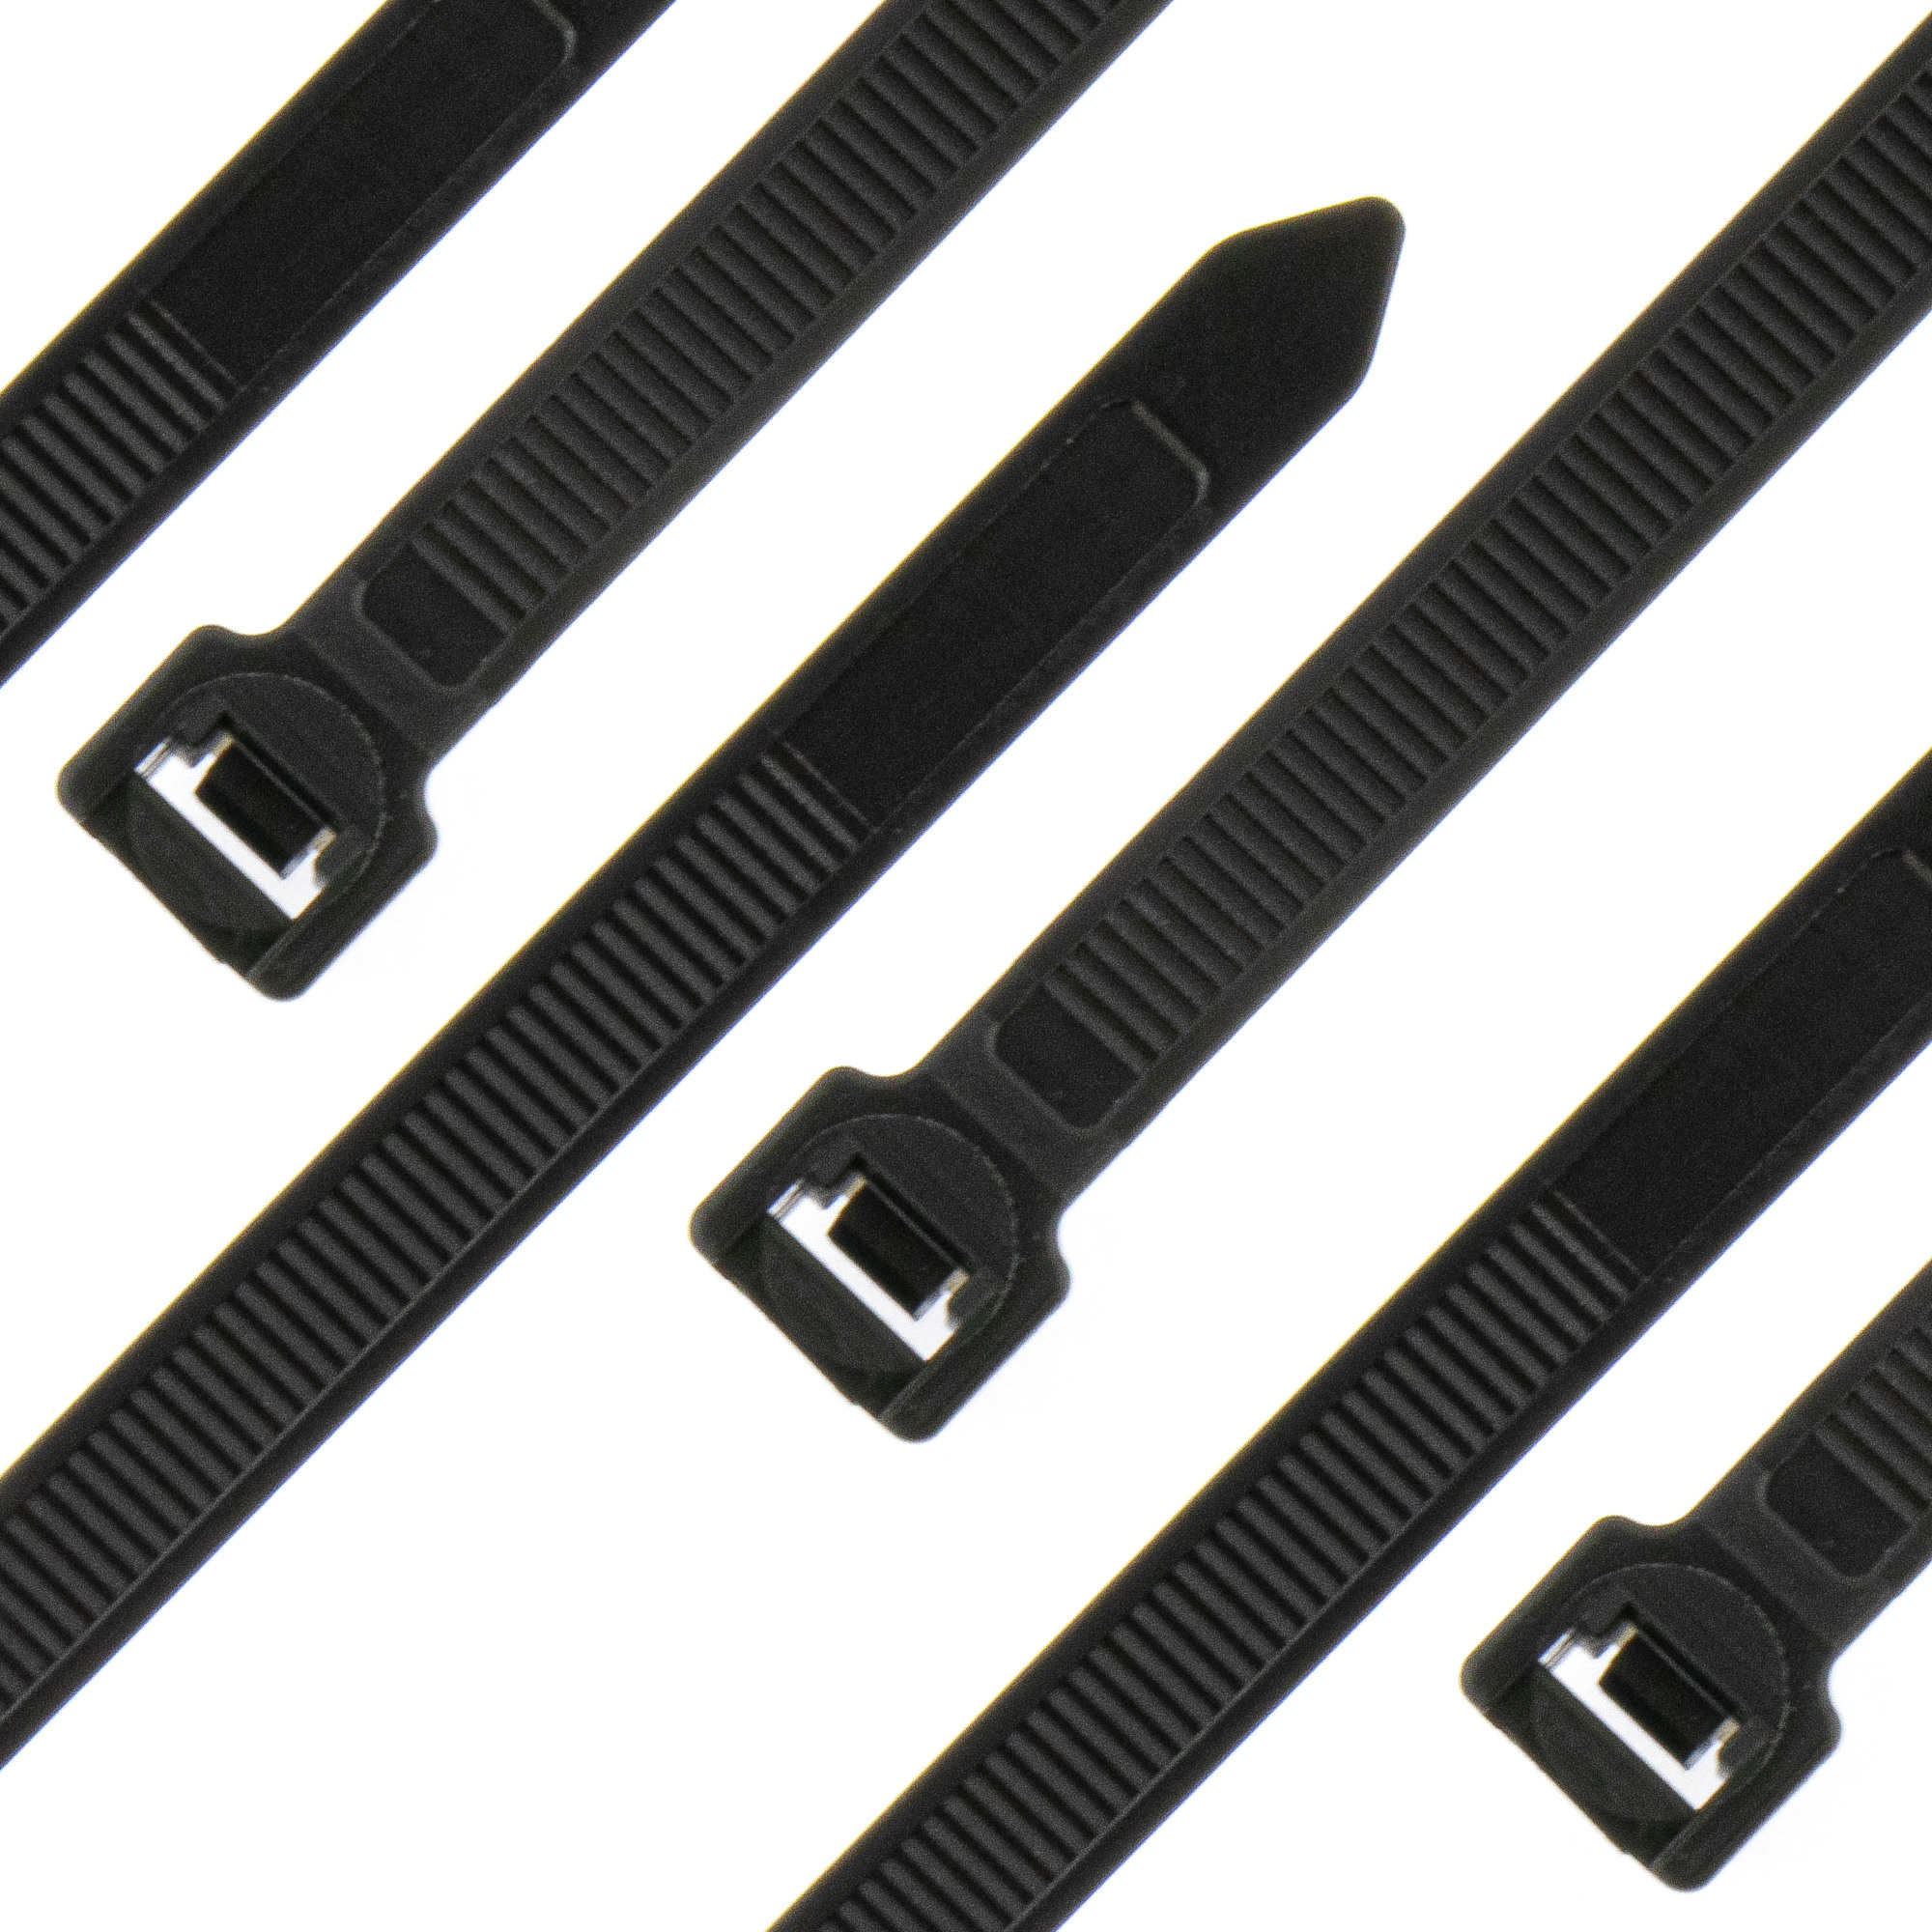 Cable tie self-locking 550 x 9,0mm, black, 100PCS